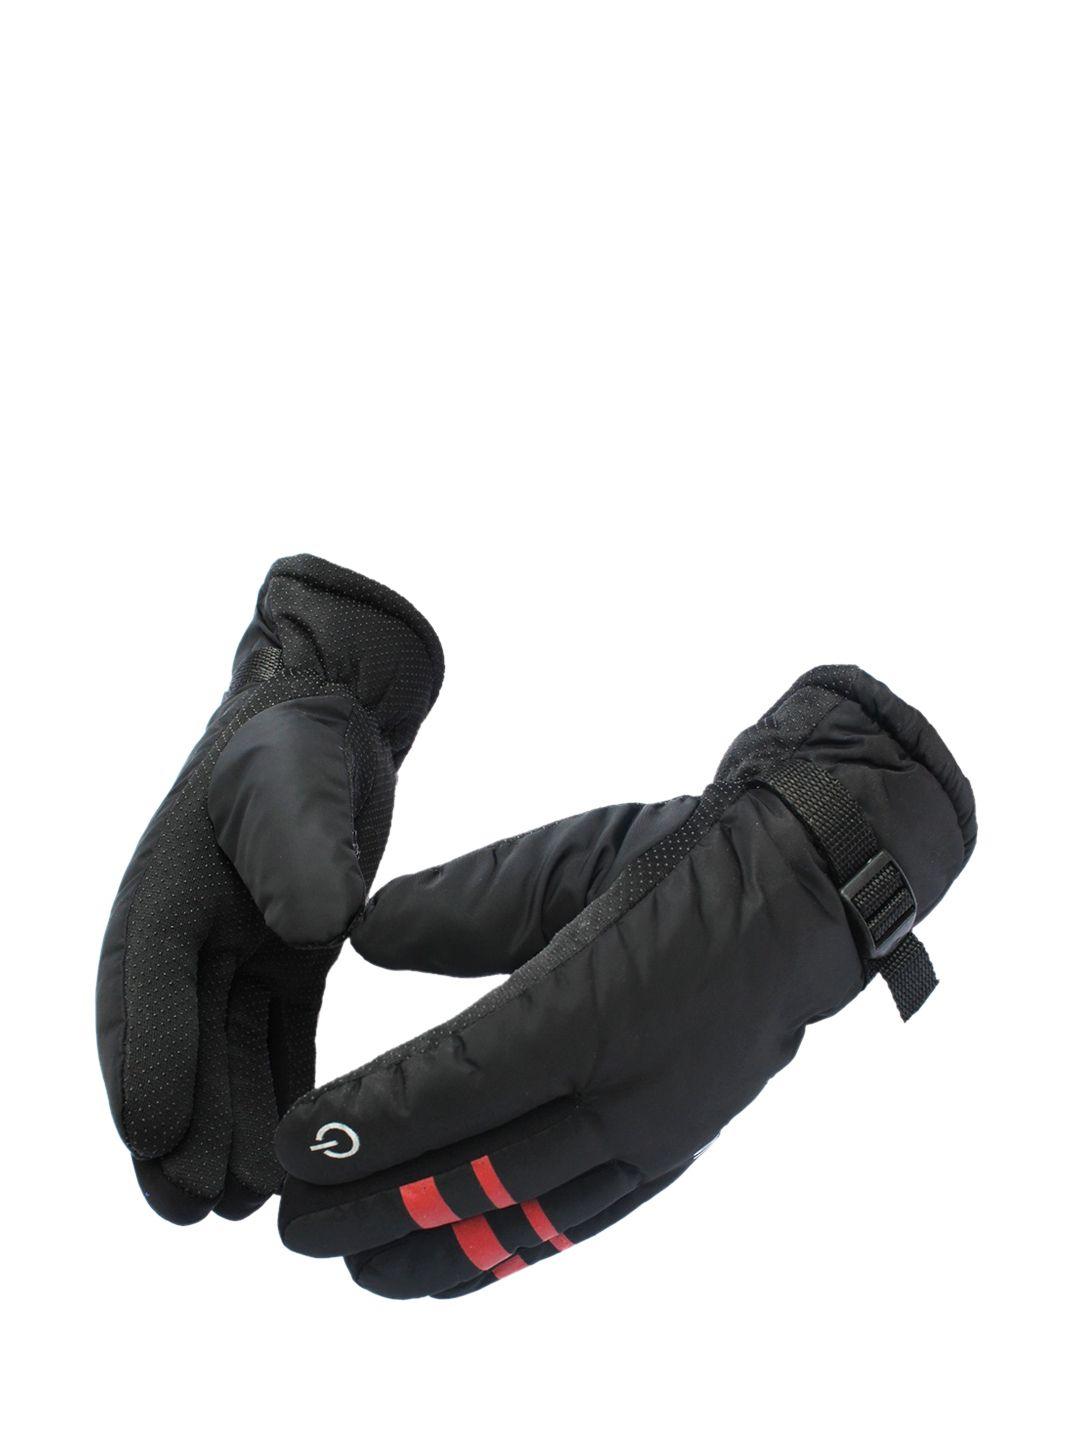 alexvyan men synthetics warm protective riding gloves